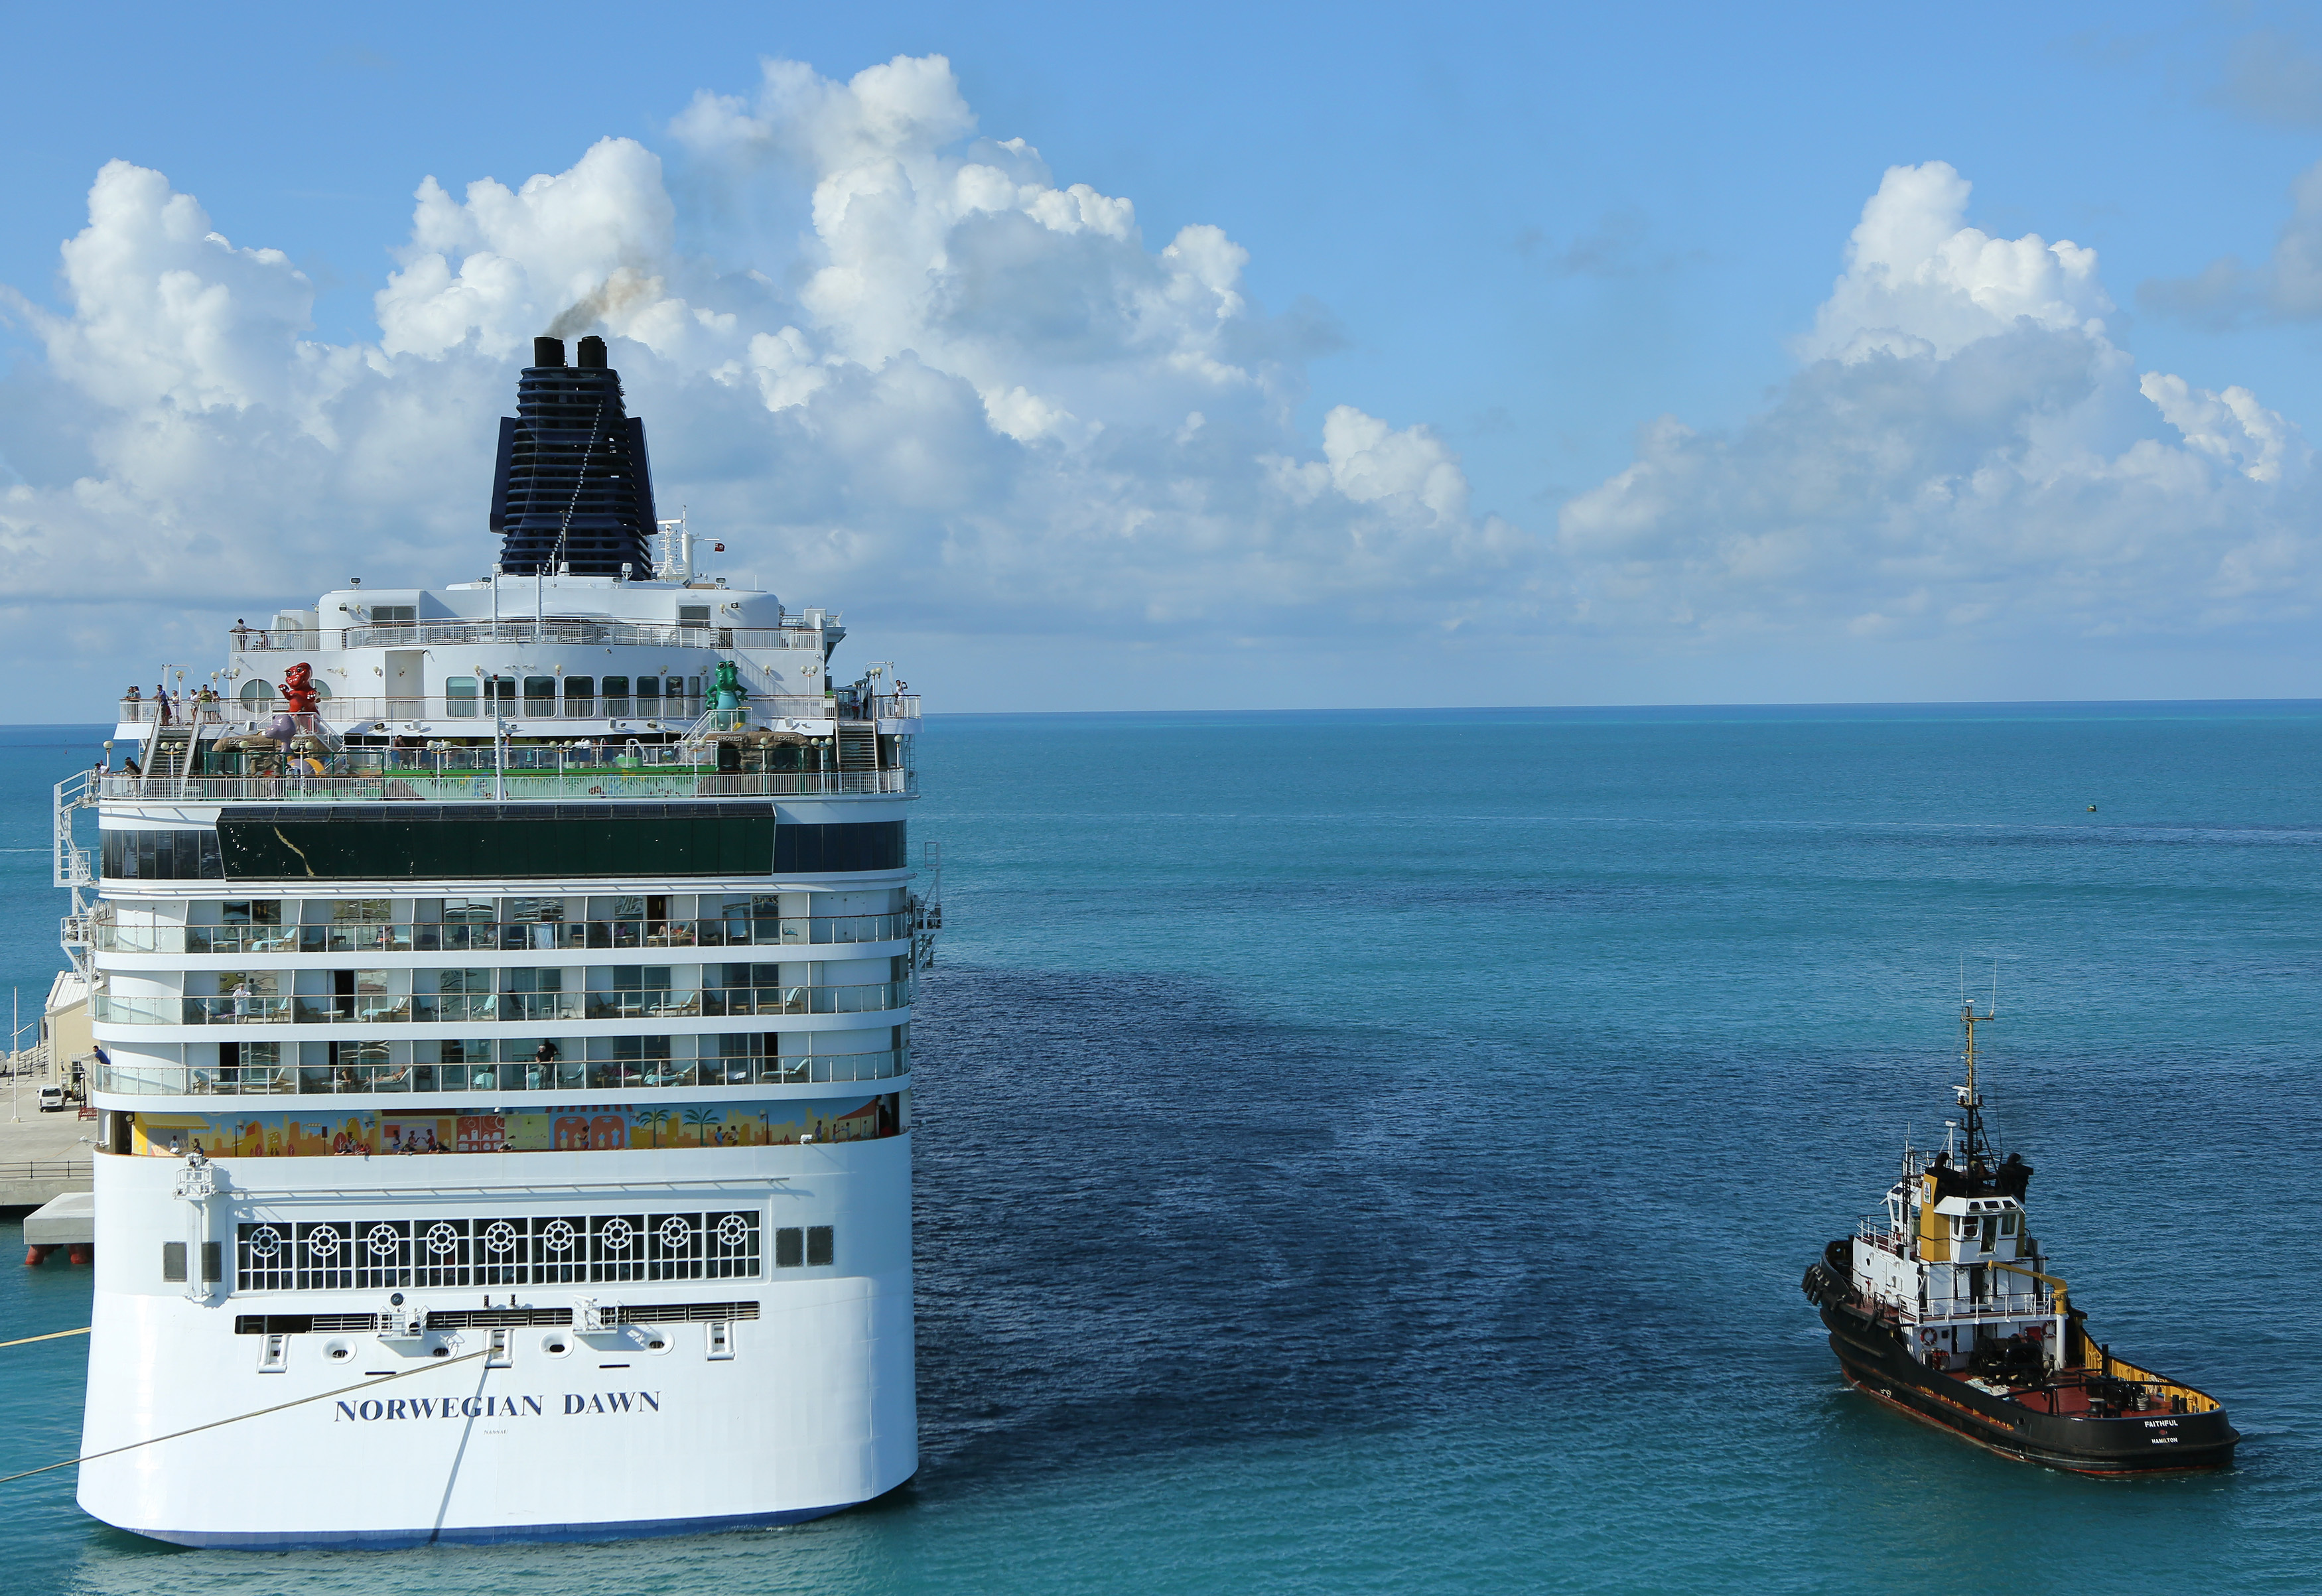 Cruise ship Norwegian Dawn departs port near Hamilton Bermuda